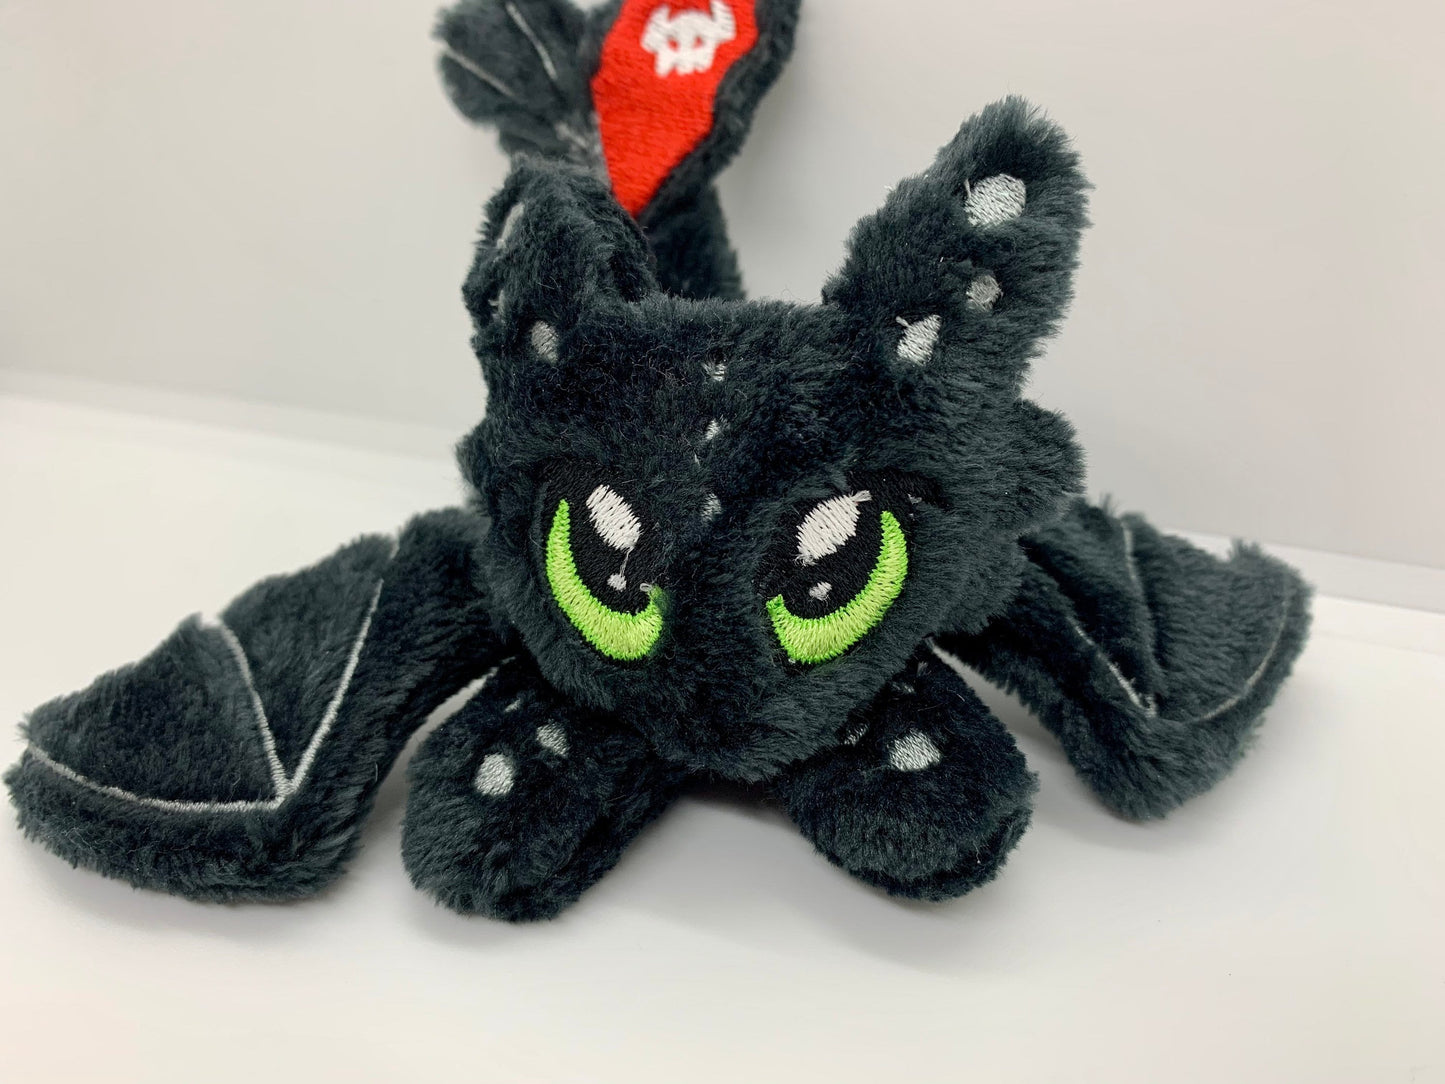 Adorable Black Dragon No Teeth inspired plush, Train Your Dragon inspired plushie, Night Angry